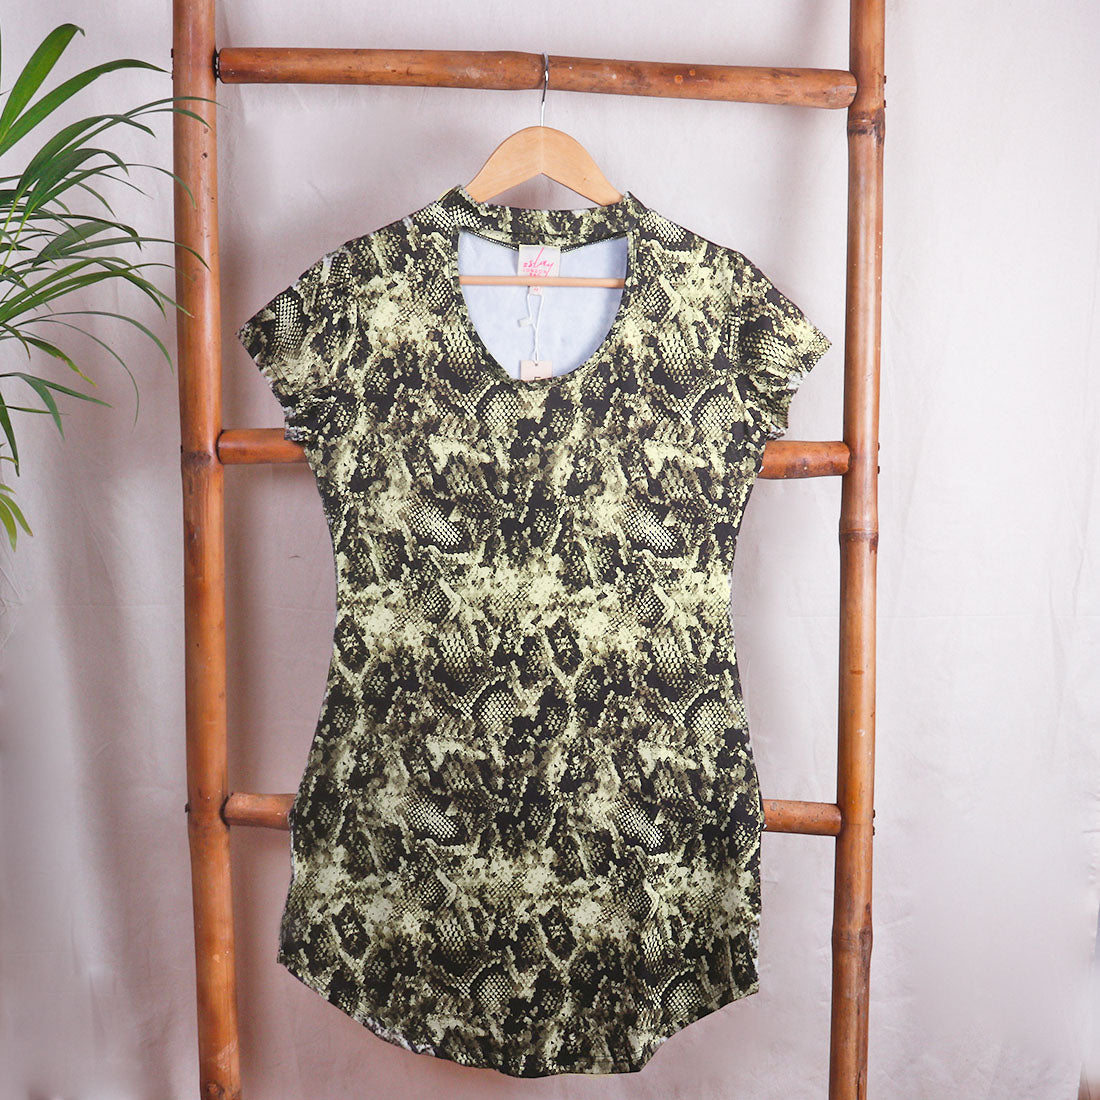 Python Print Choker Neckline Dress - Olive Green